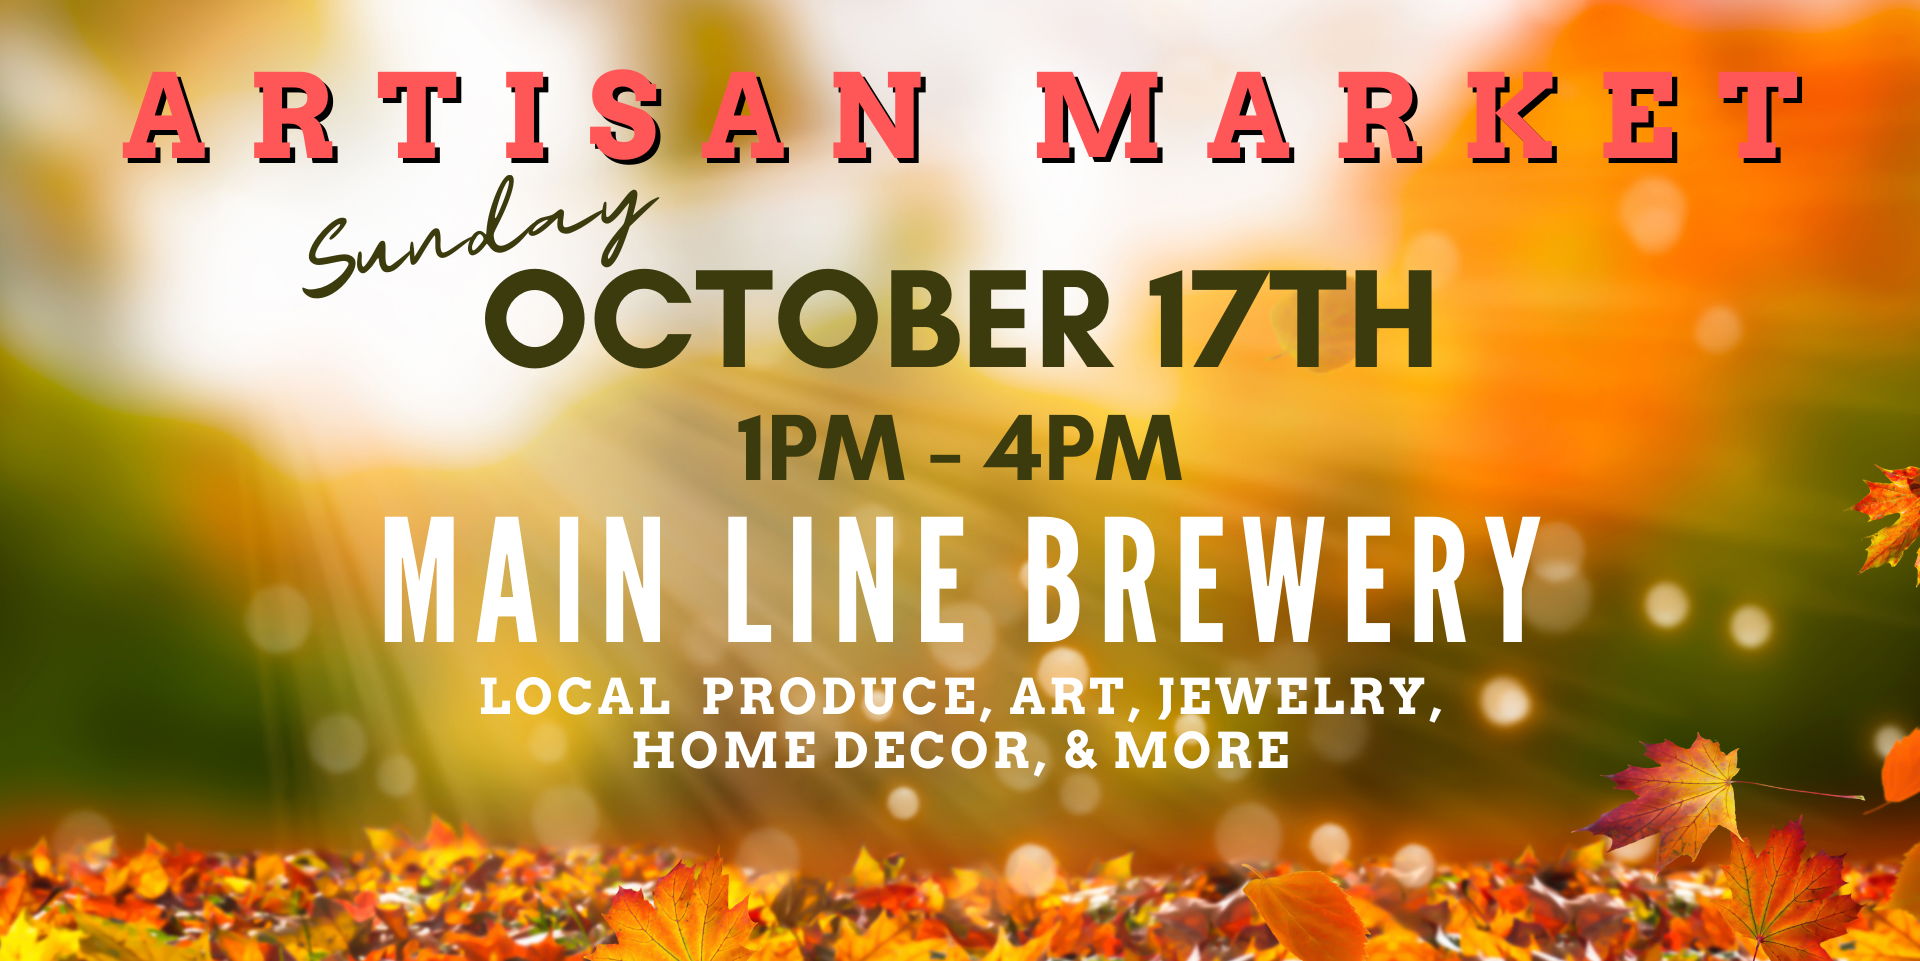 Sunday Artisan Market at Main Line Brewery  promotional image